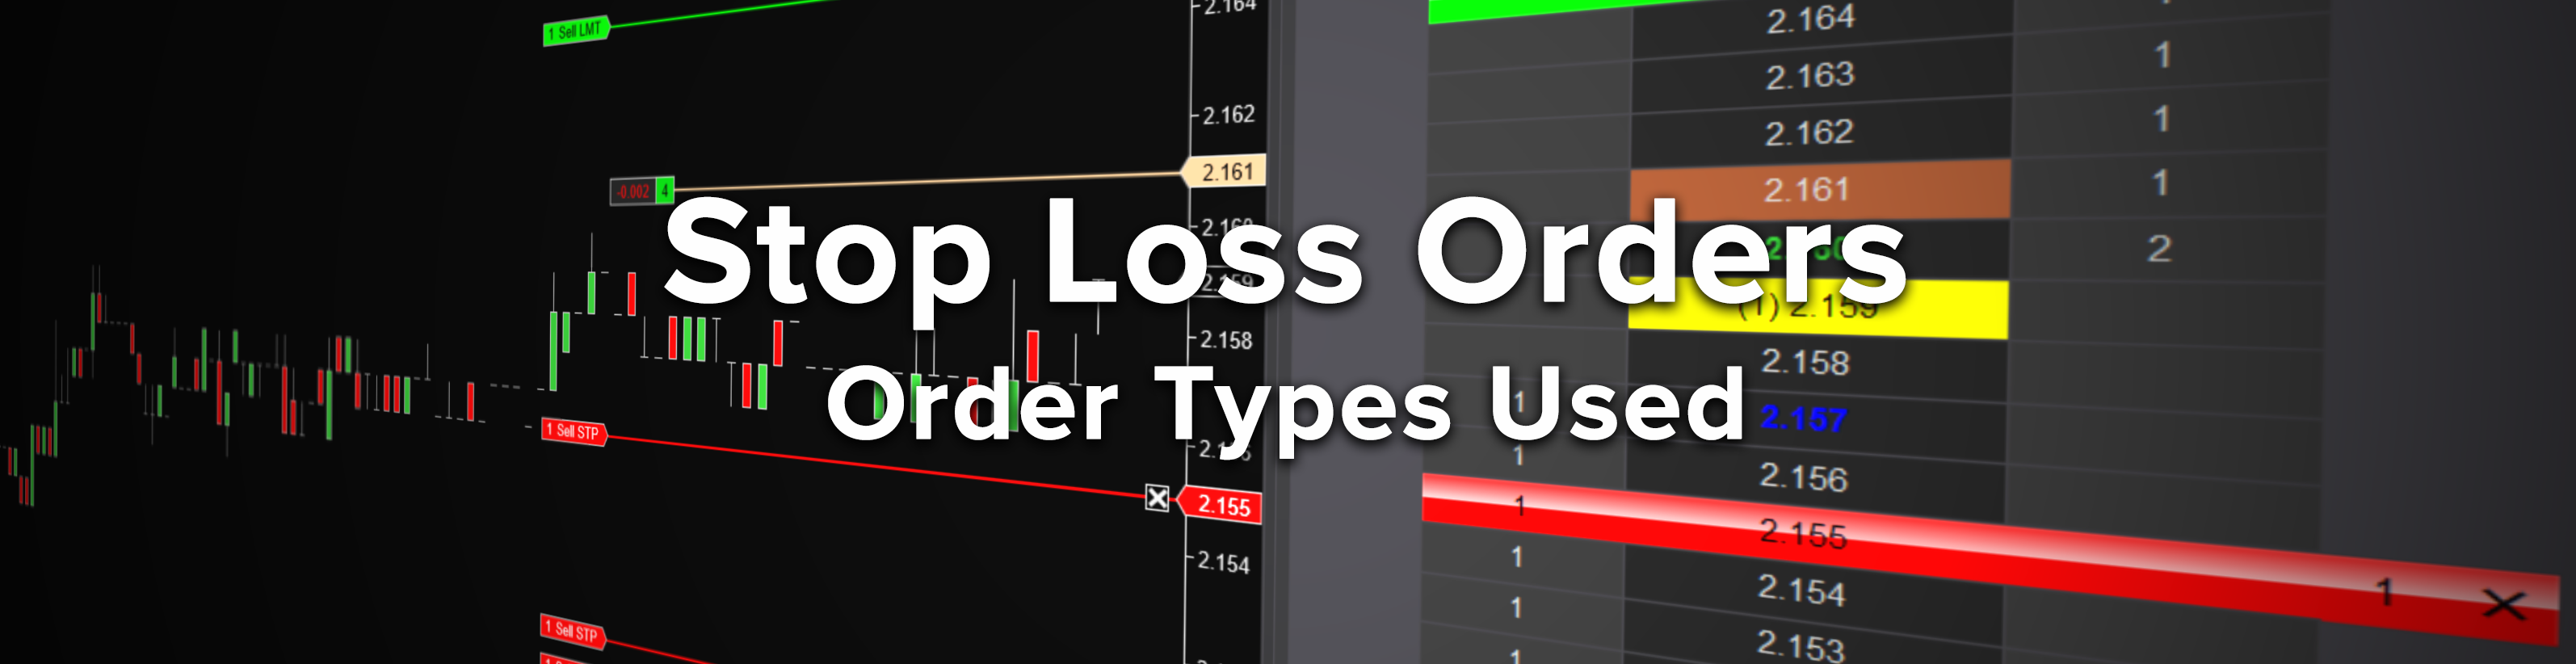 Stop loss orders